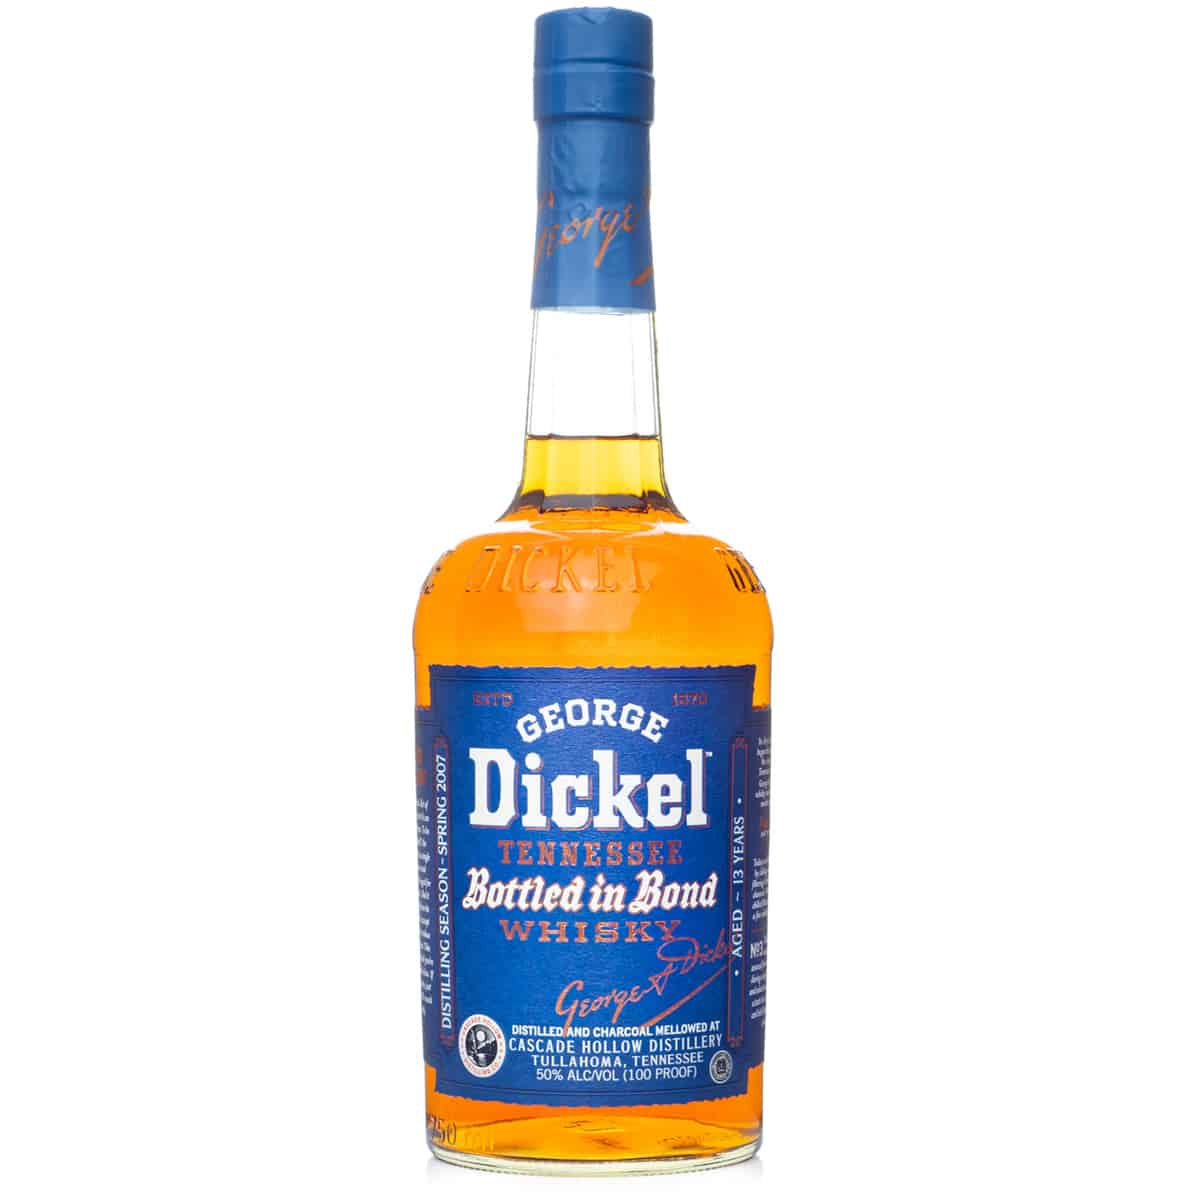 George Dickel 13-Year-Old Bottle-in-Bond